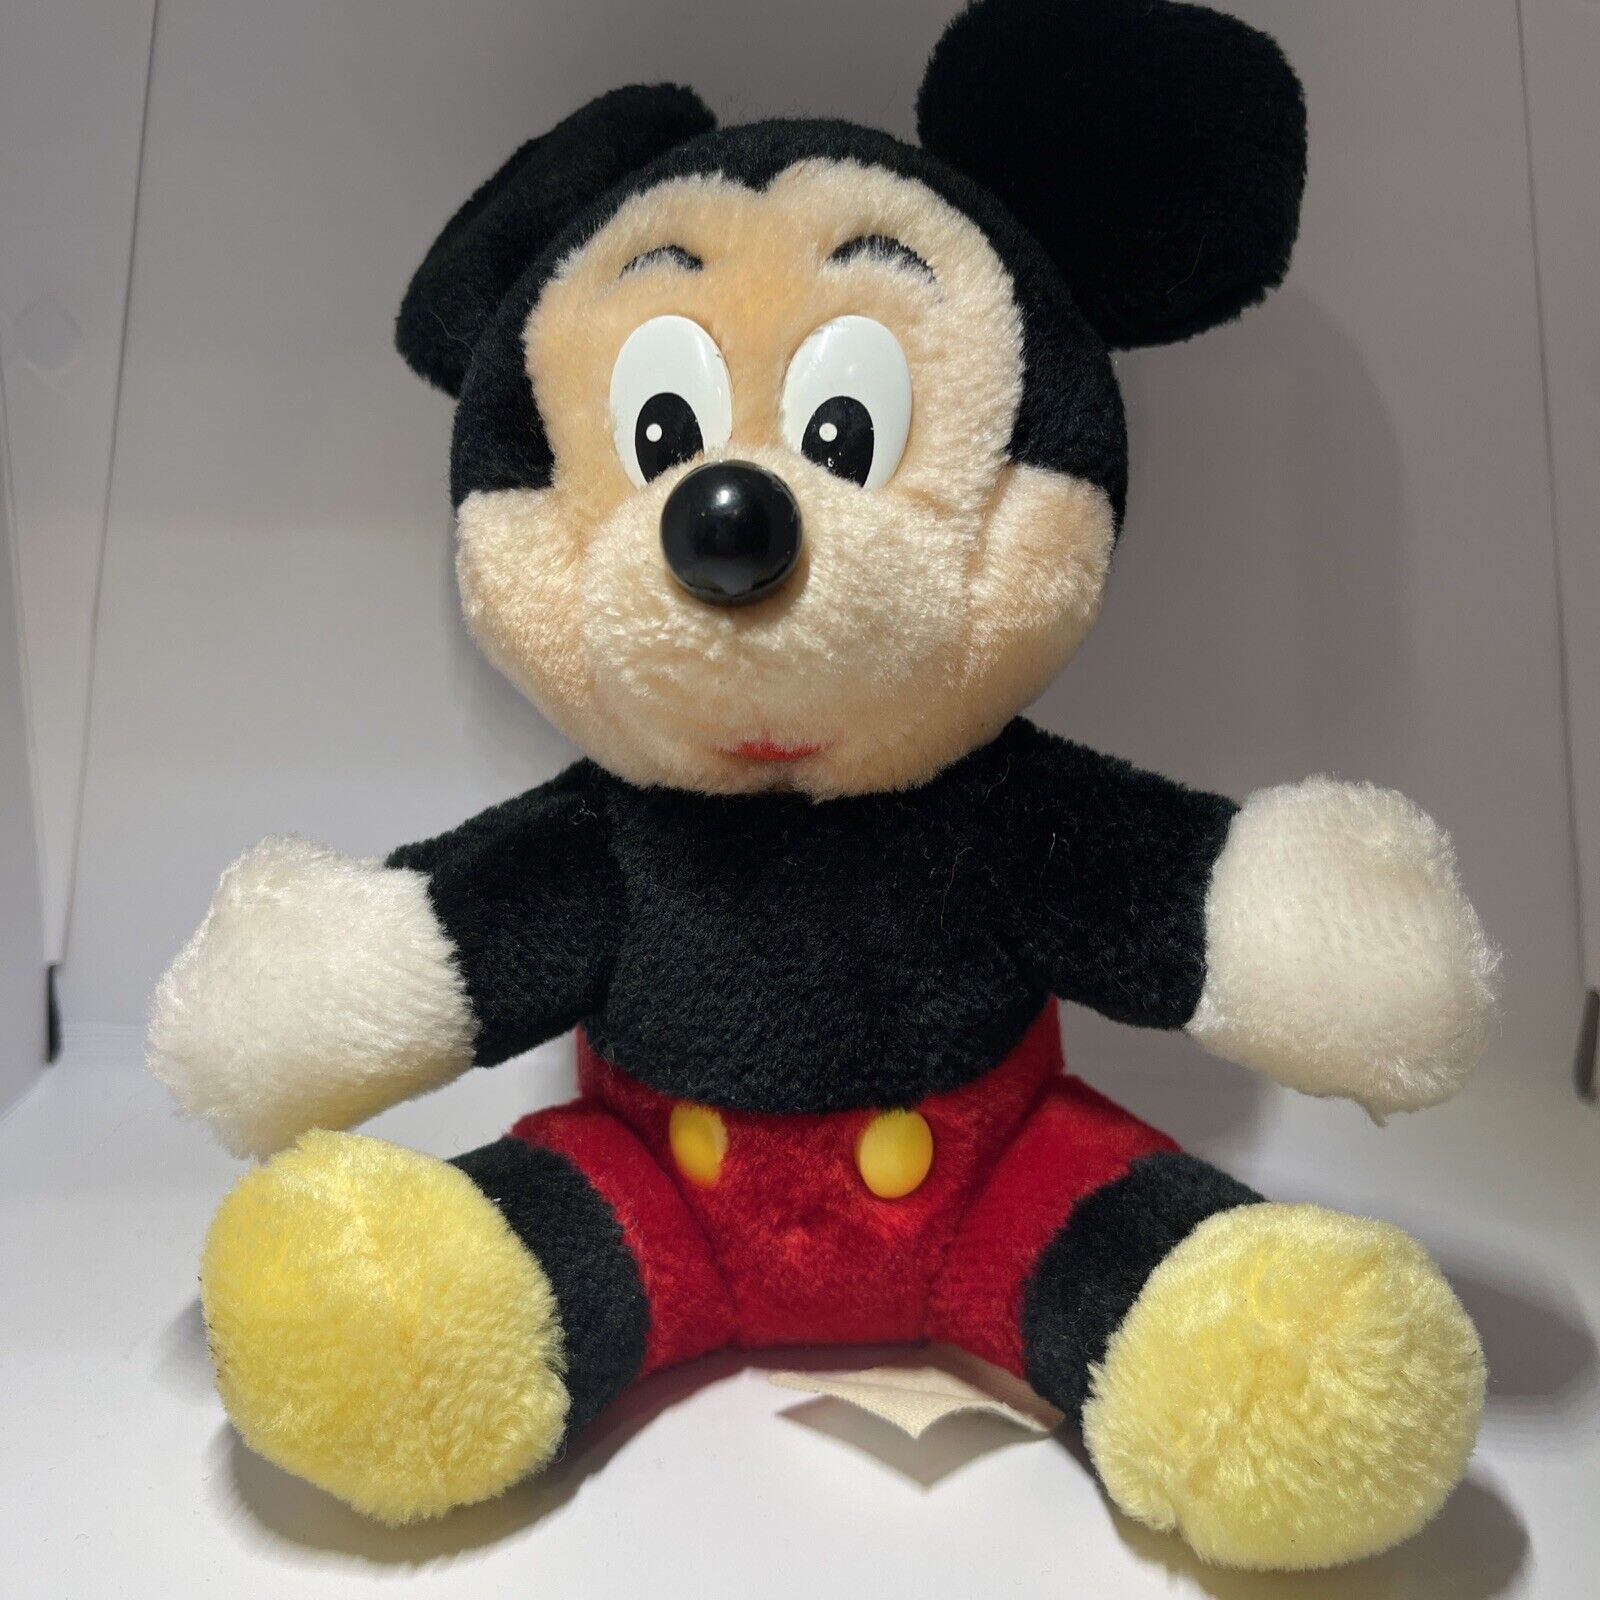 Vintage Disneyland Walt Disney World Mickey Mouse Soft Plush Toy 1980’s